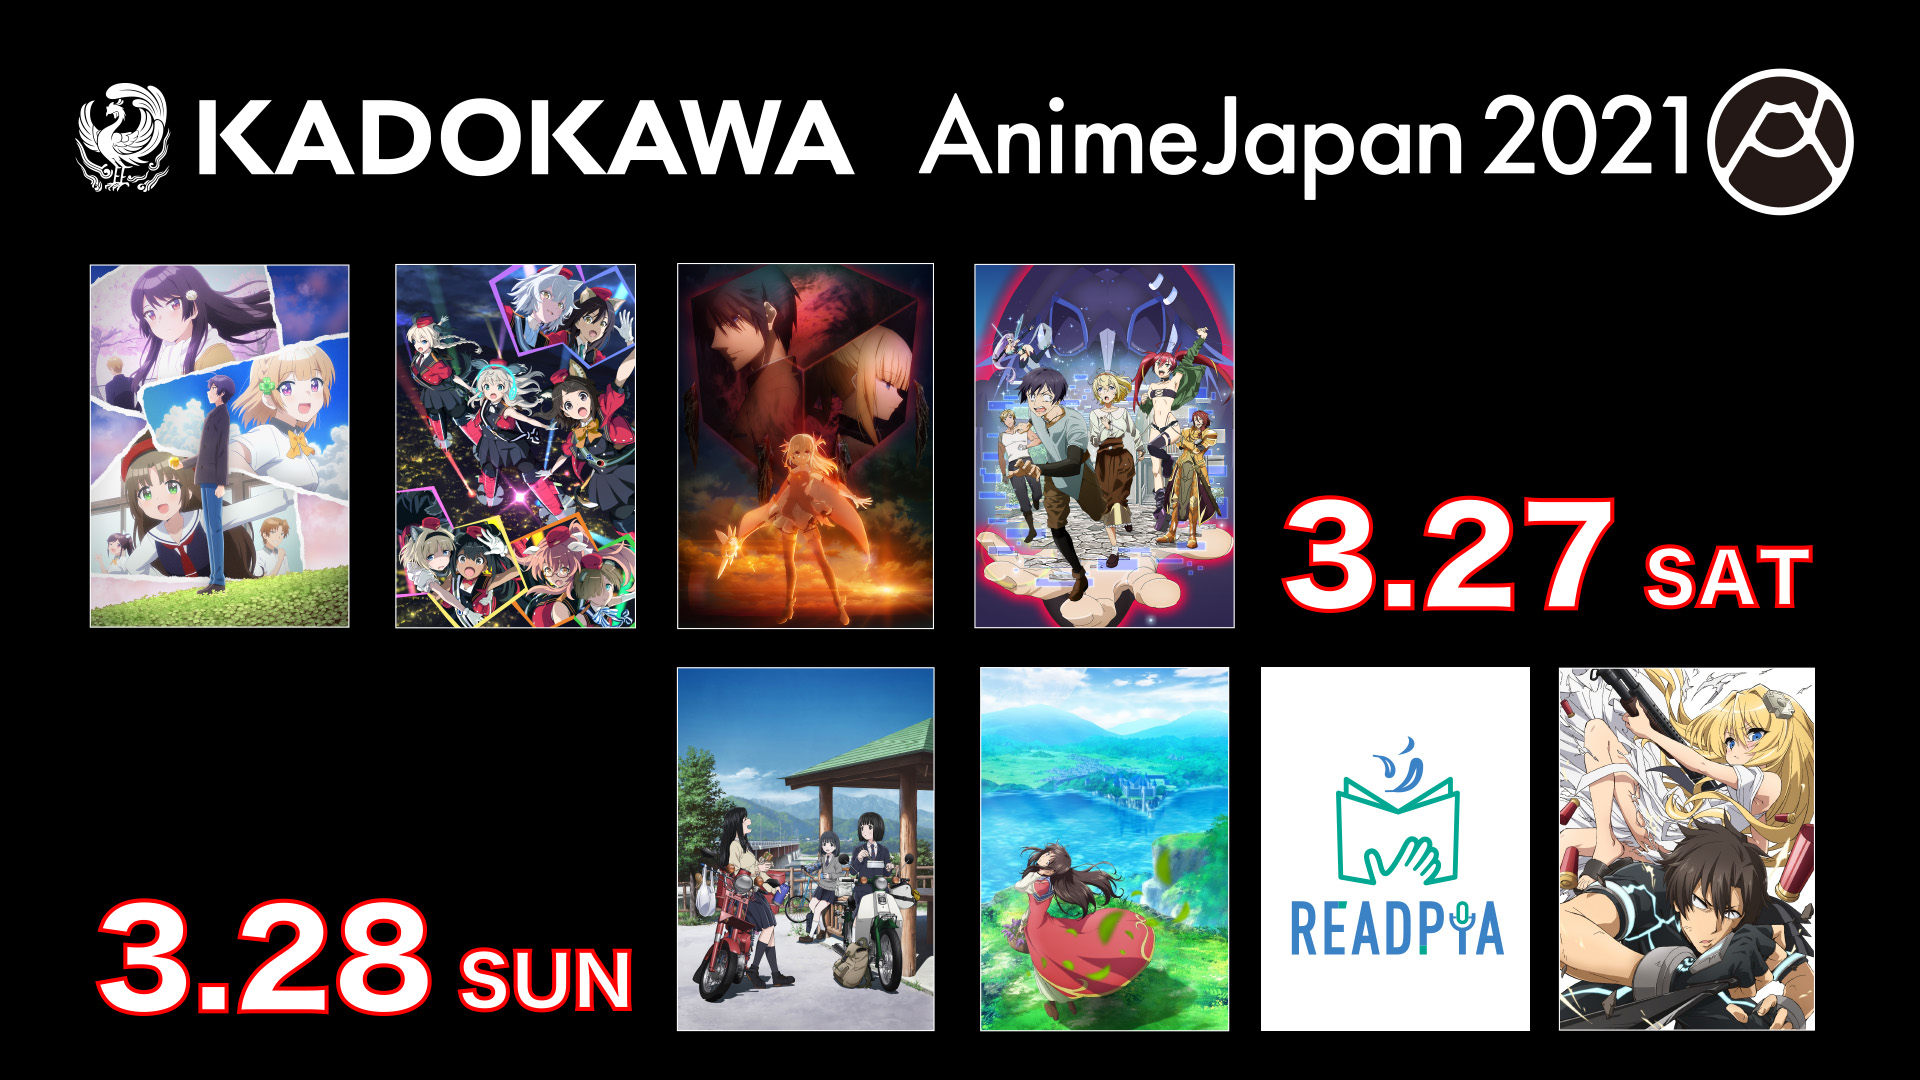 Animejapan 21のkadokawaブースでは 豪華キャスト出演の8ステージを無料で配信 株式会社kadokawaのプレスリリース